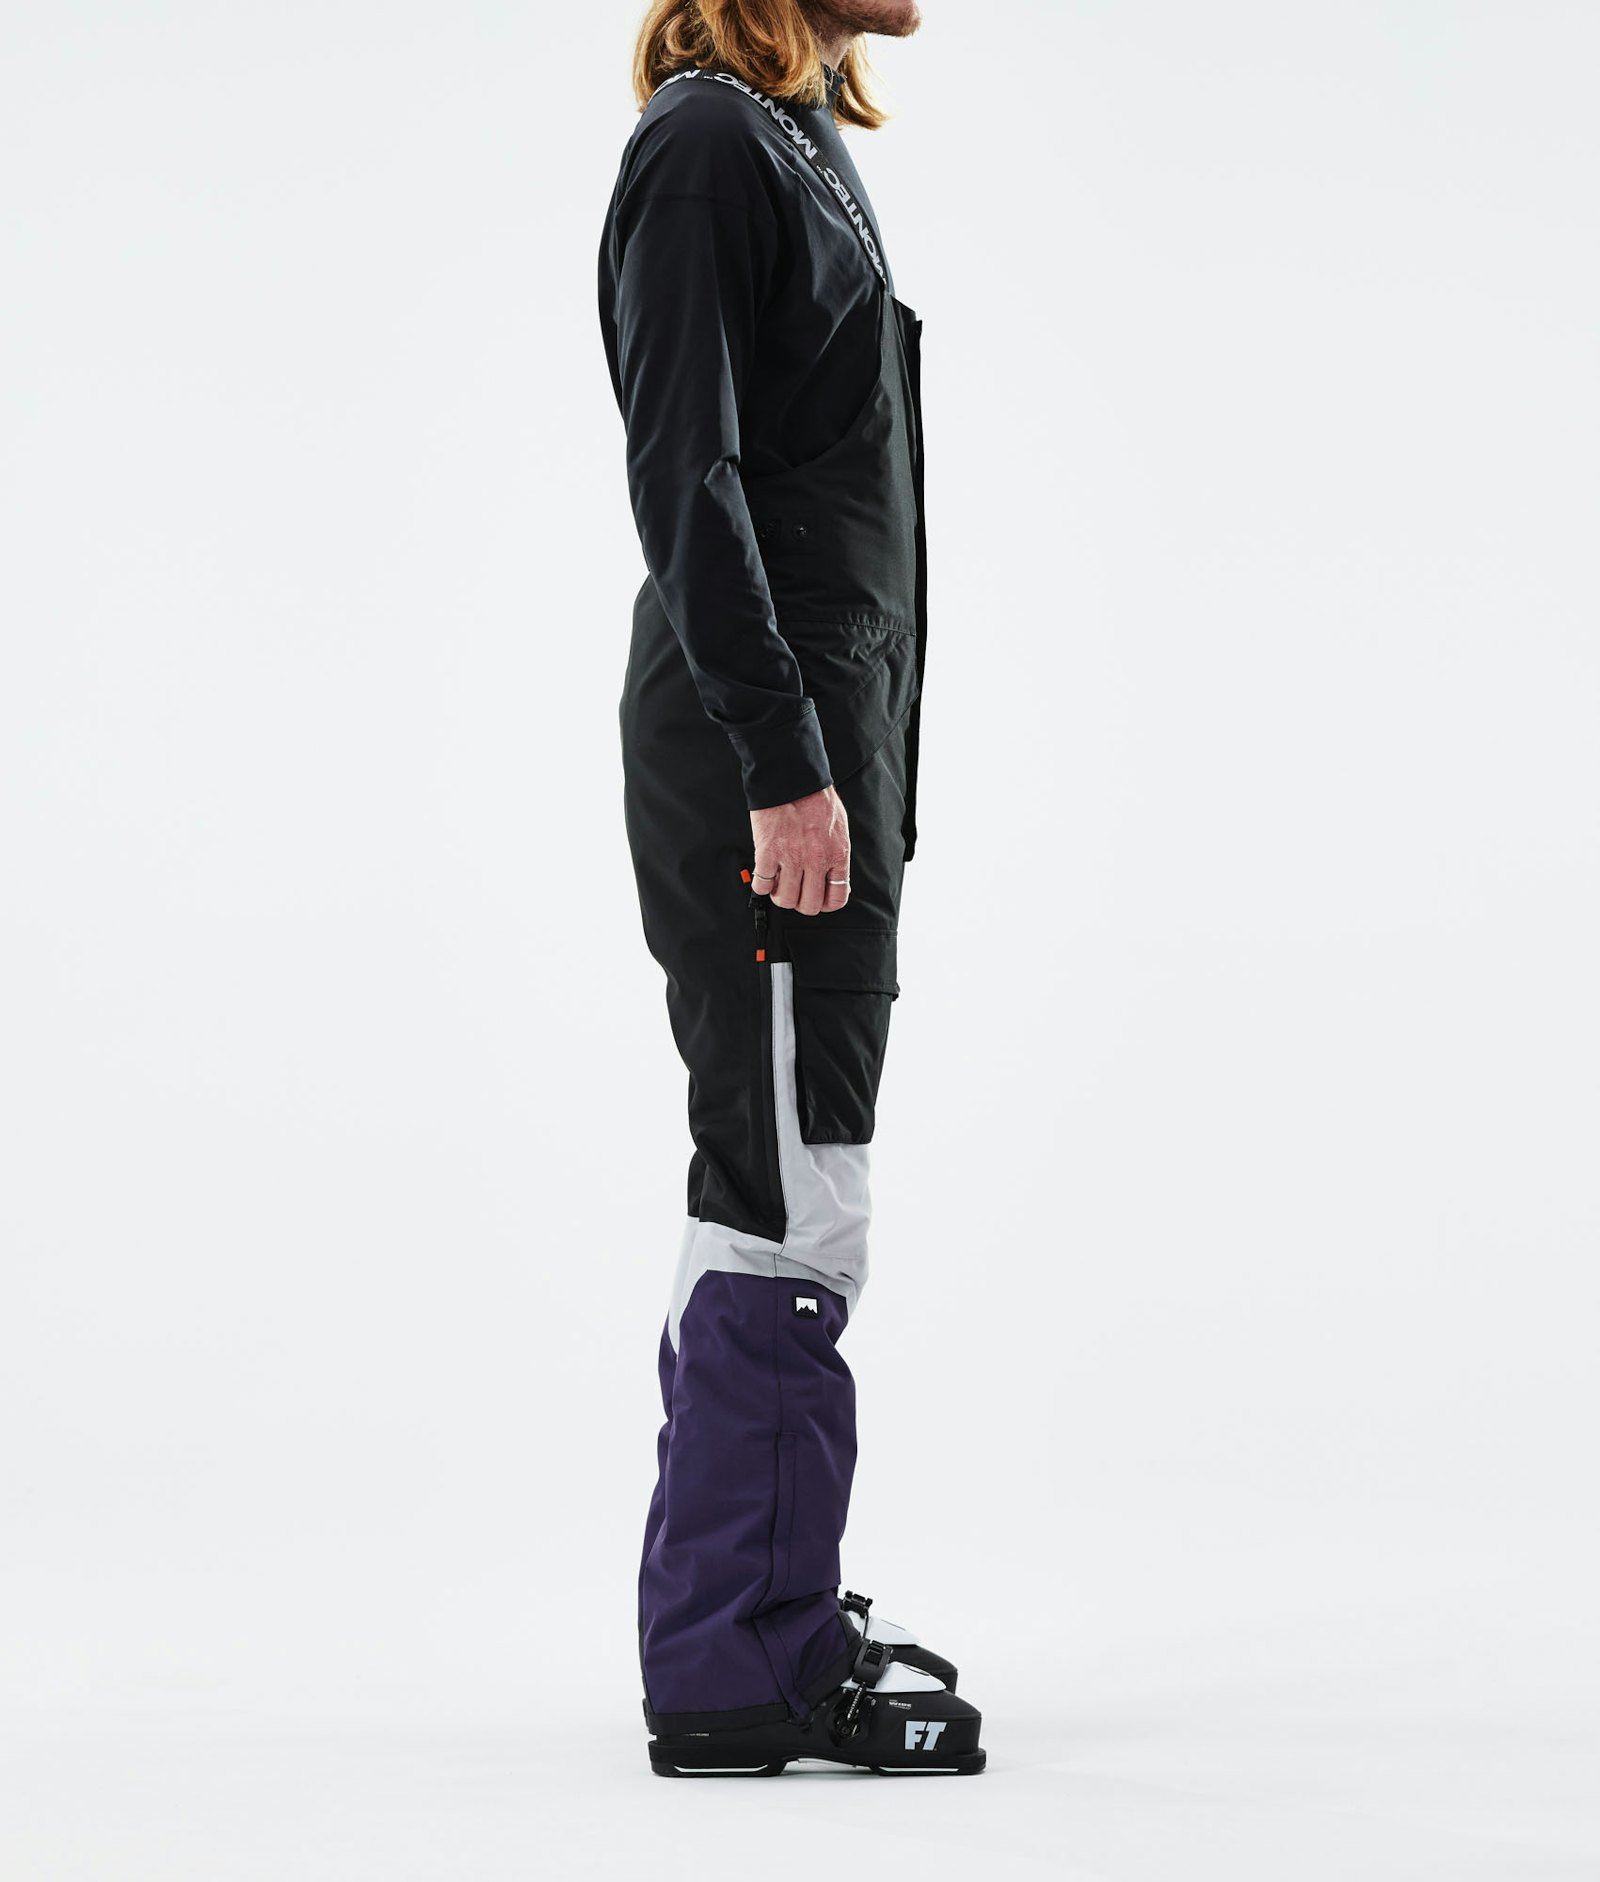 Fawk 2021 Pantalon de Ski Homme Black/Light Grey/Purple